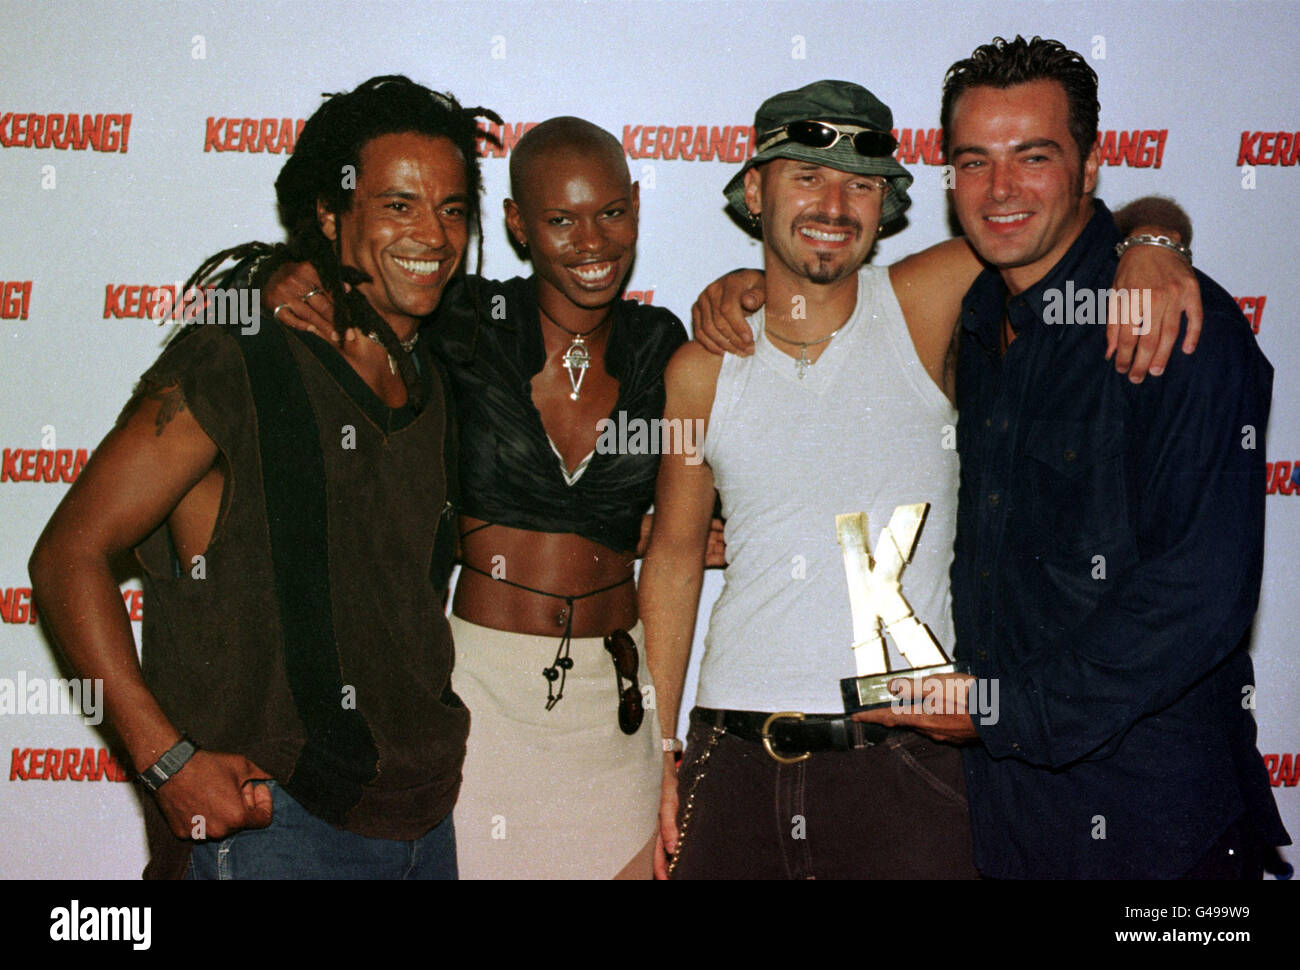 Skunk Anansie aux Kerrang awards 1997 à Londres Banque D'Images